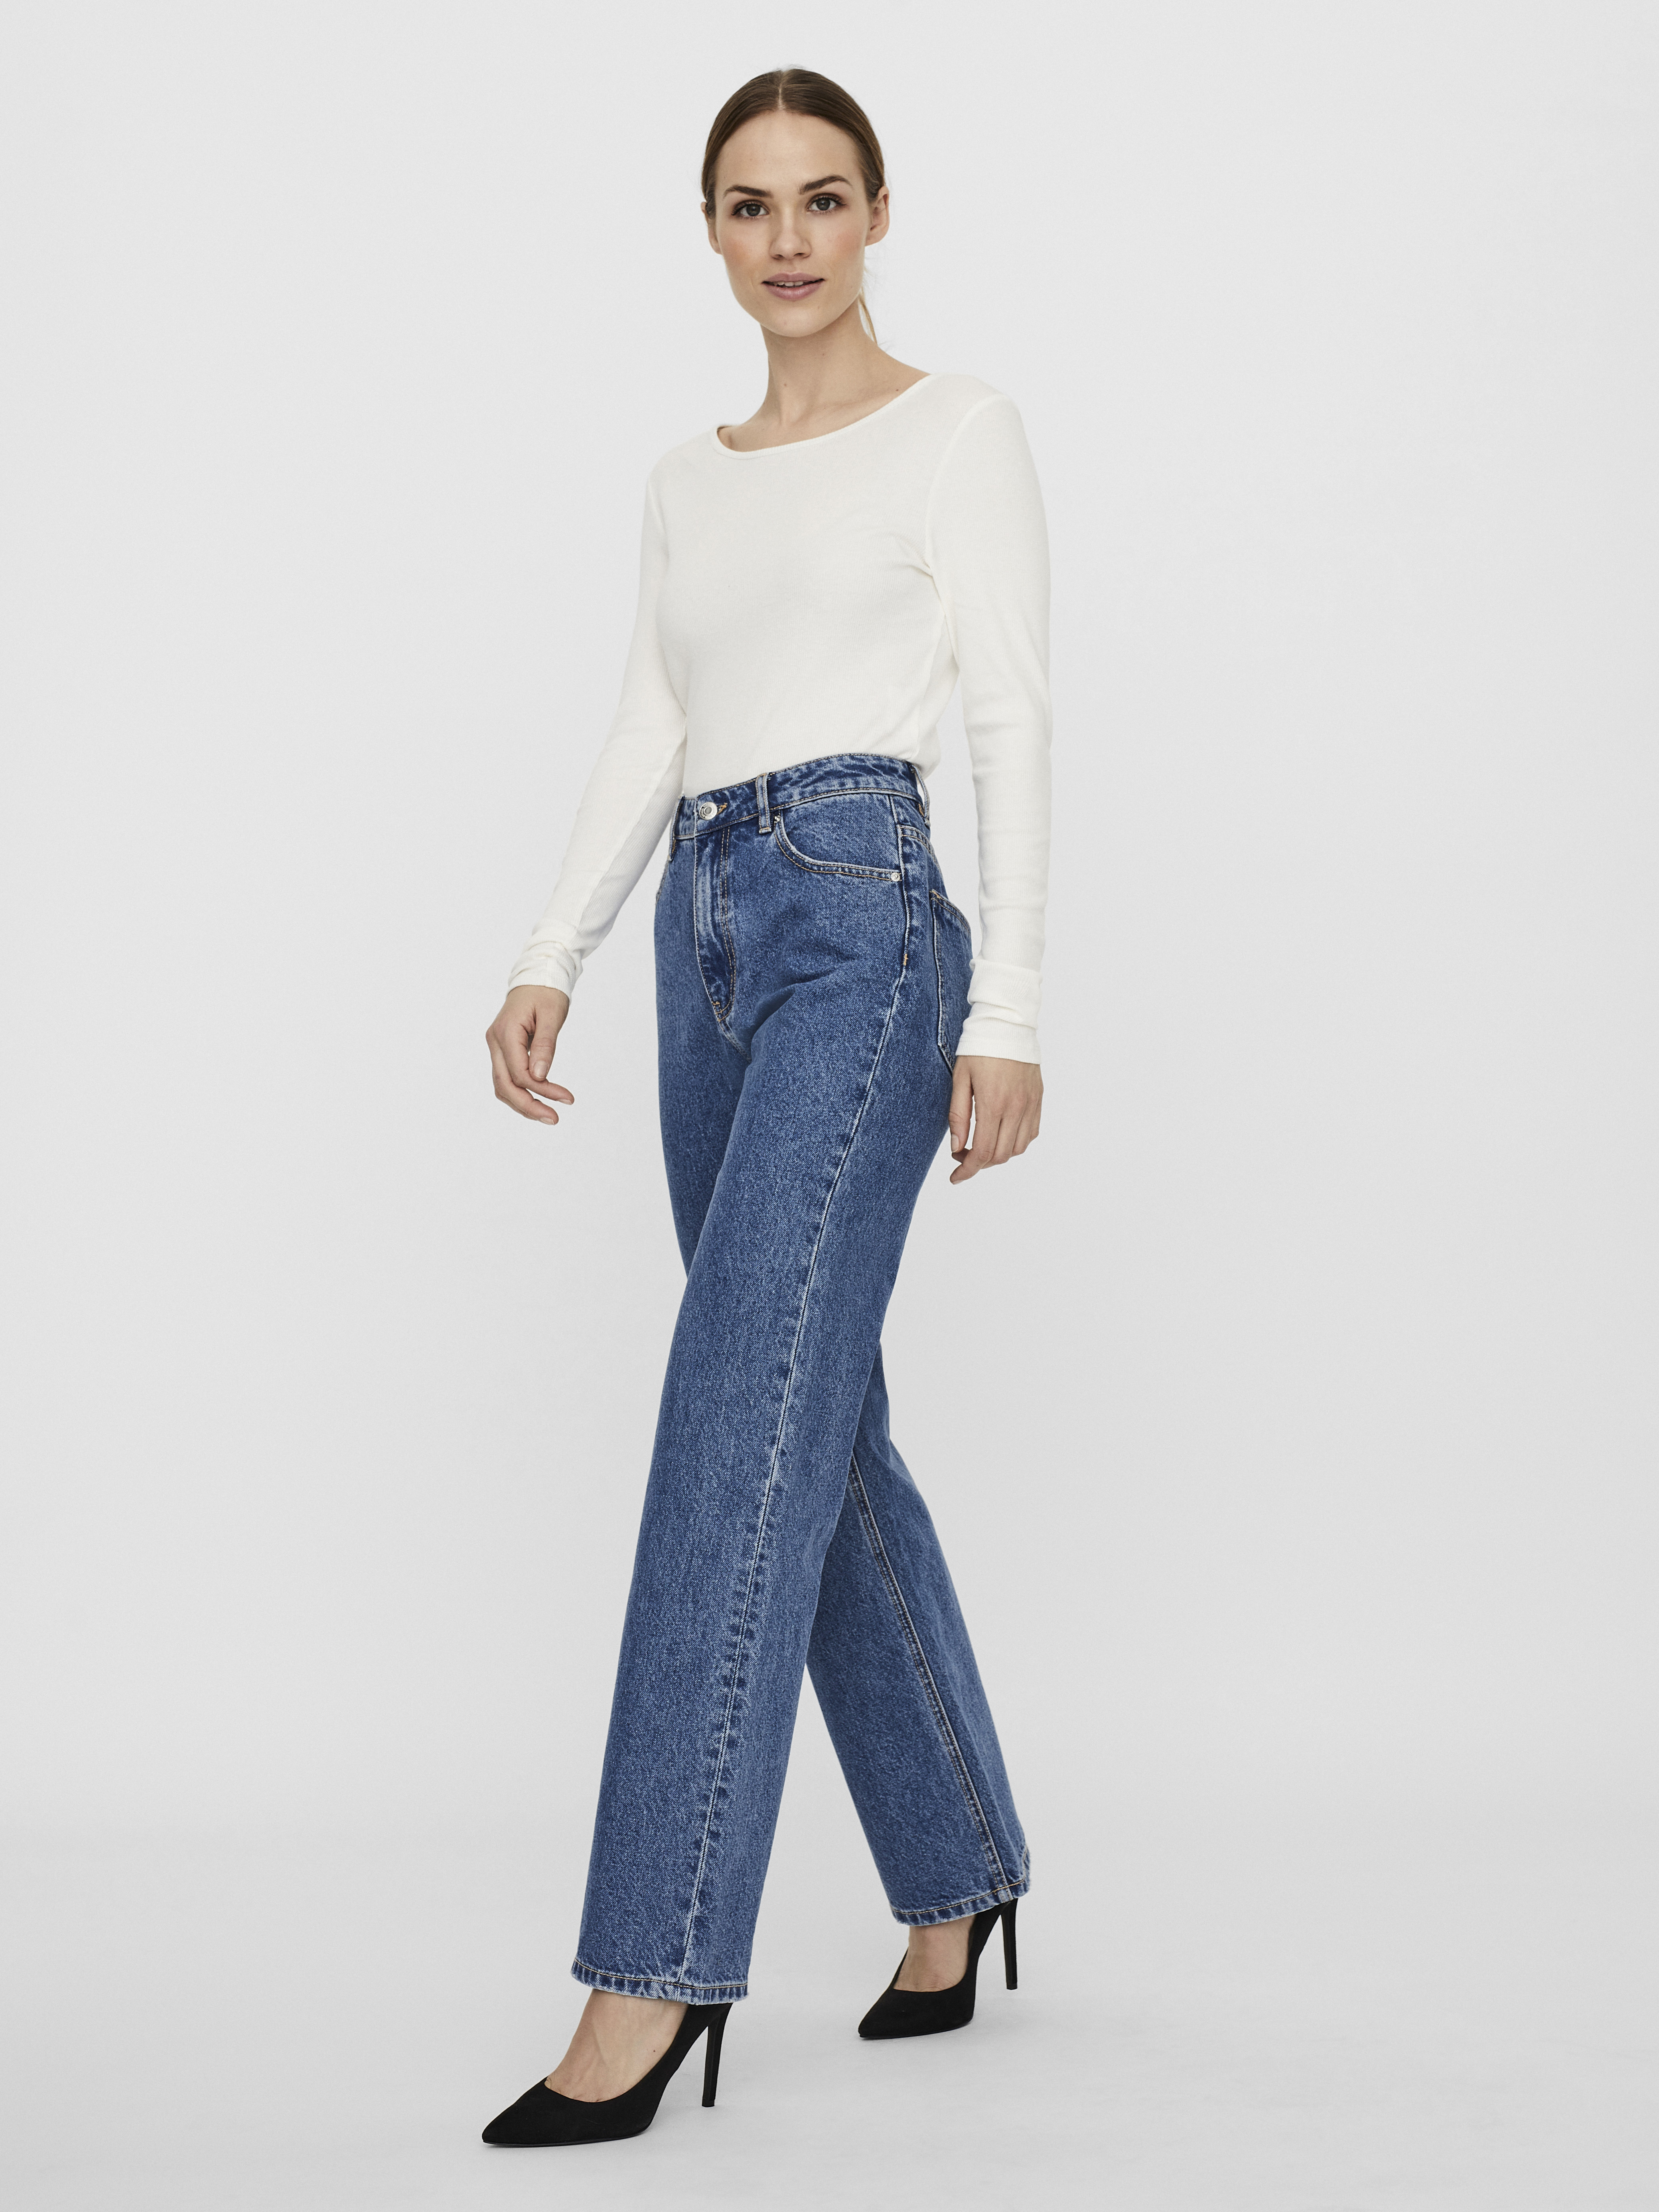 Kithy Jeans, Medium Blue Denim, W31/L34